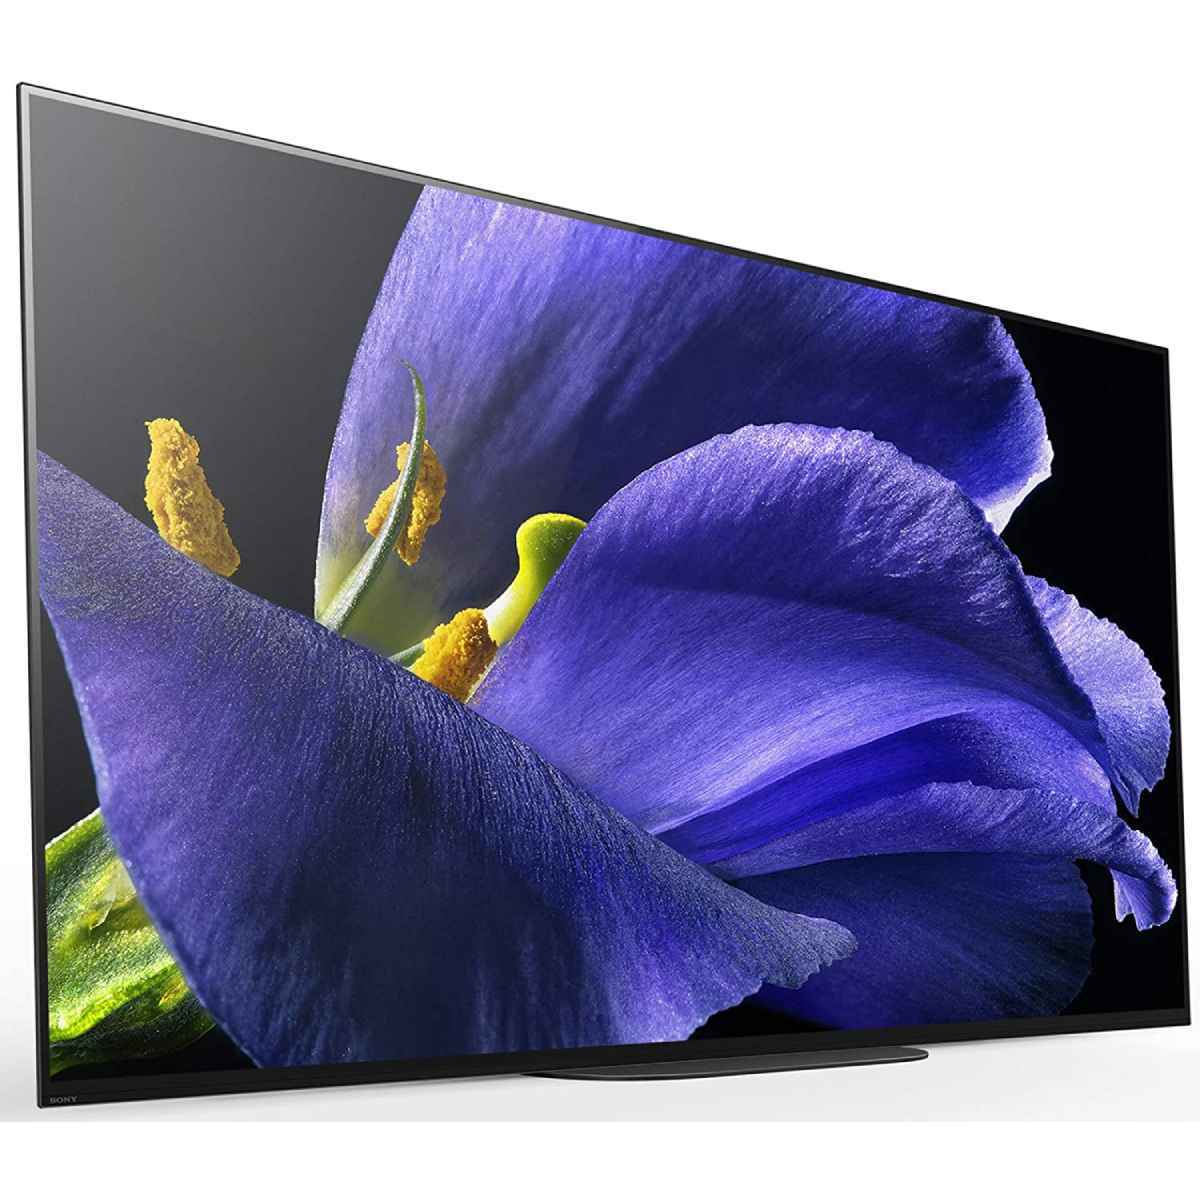 Sony Bravia 55 inches 4K Ultra HD Smart OLED TV (KD-55A9G)